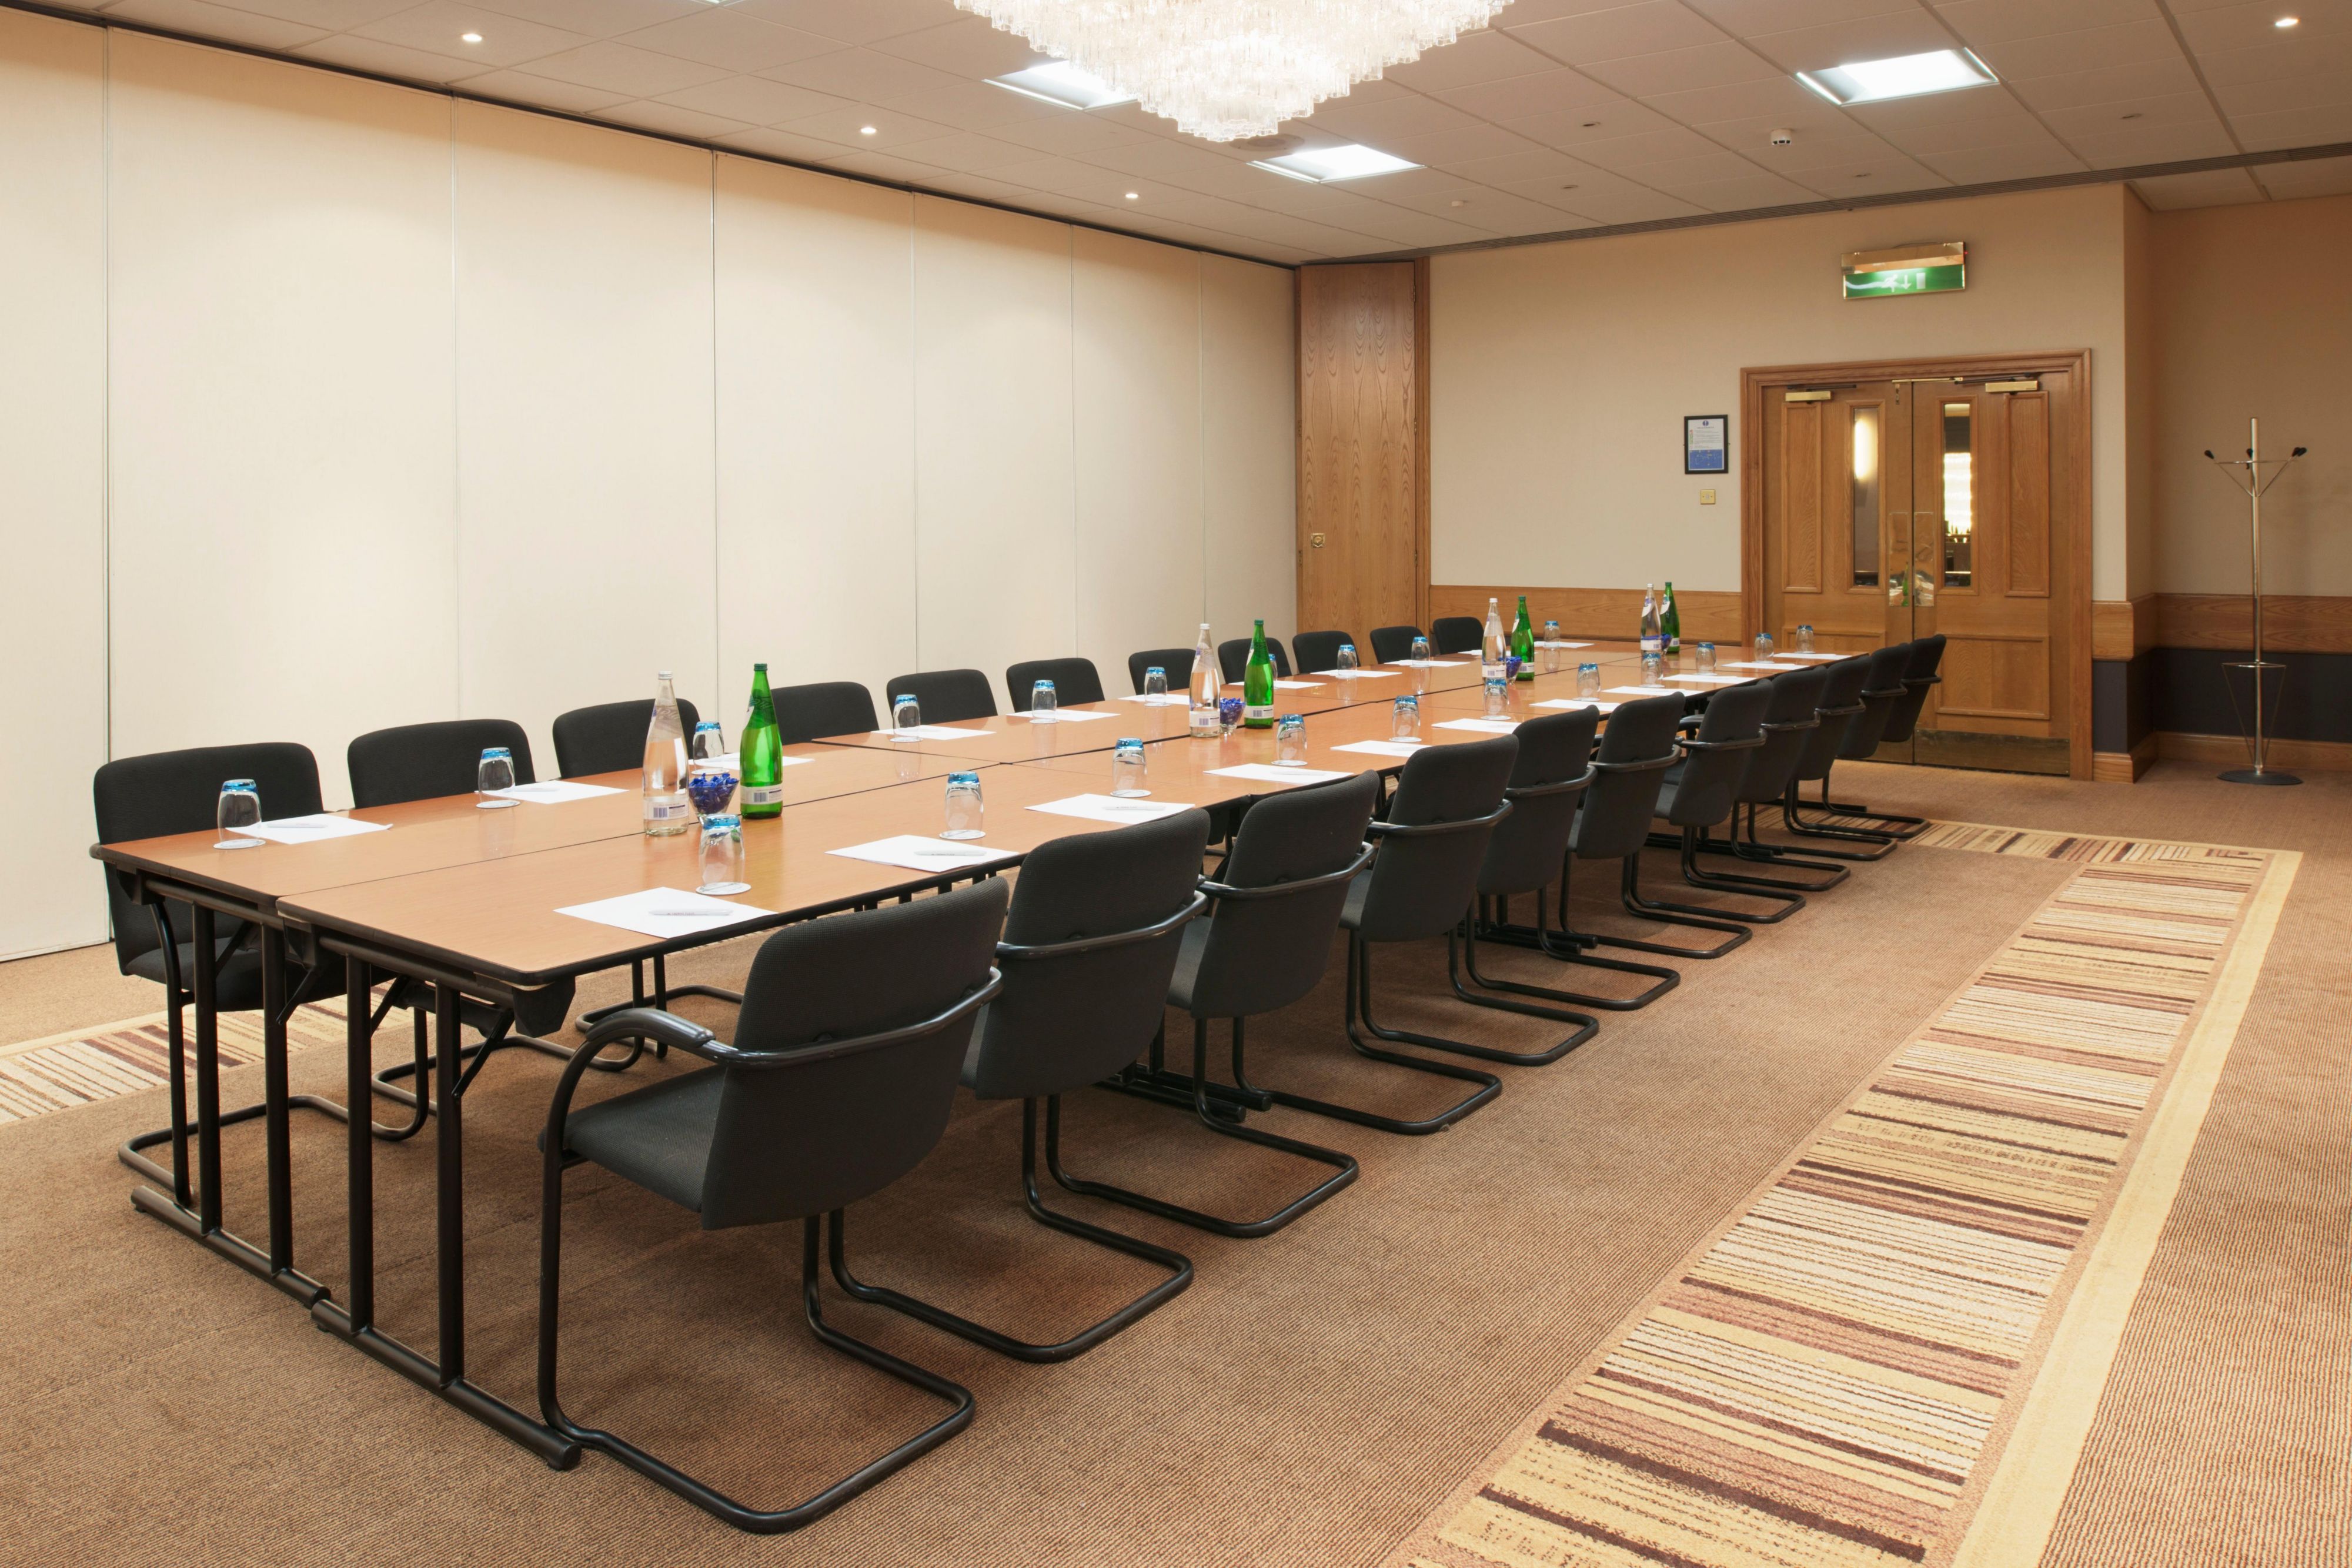 Rothesay / Cornwall Meeting Room set boardroom style